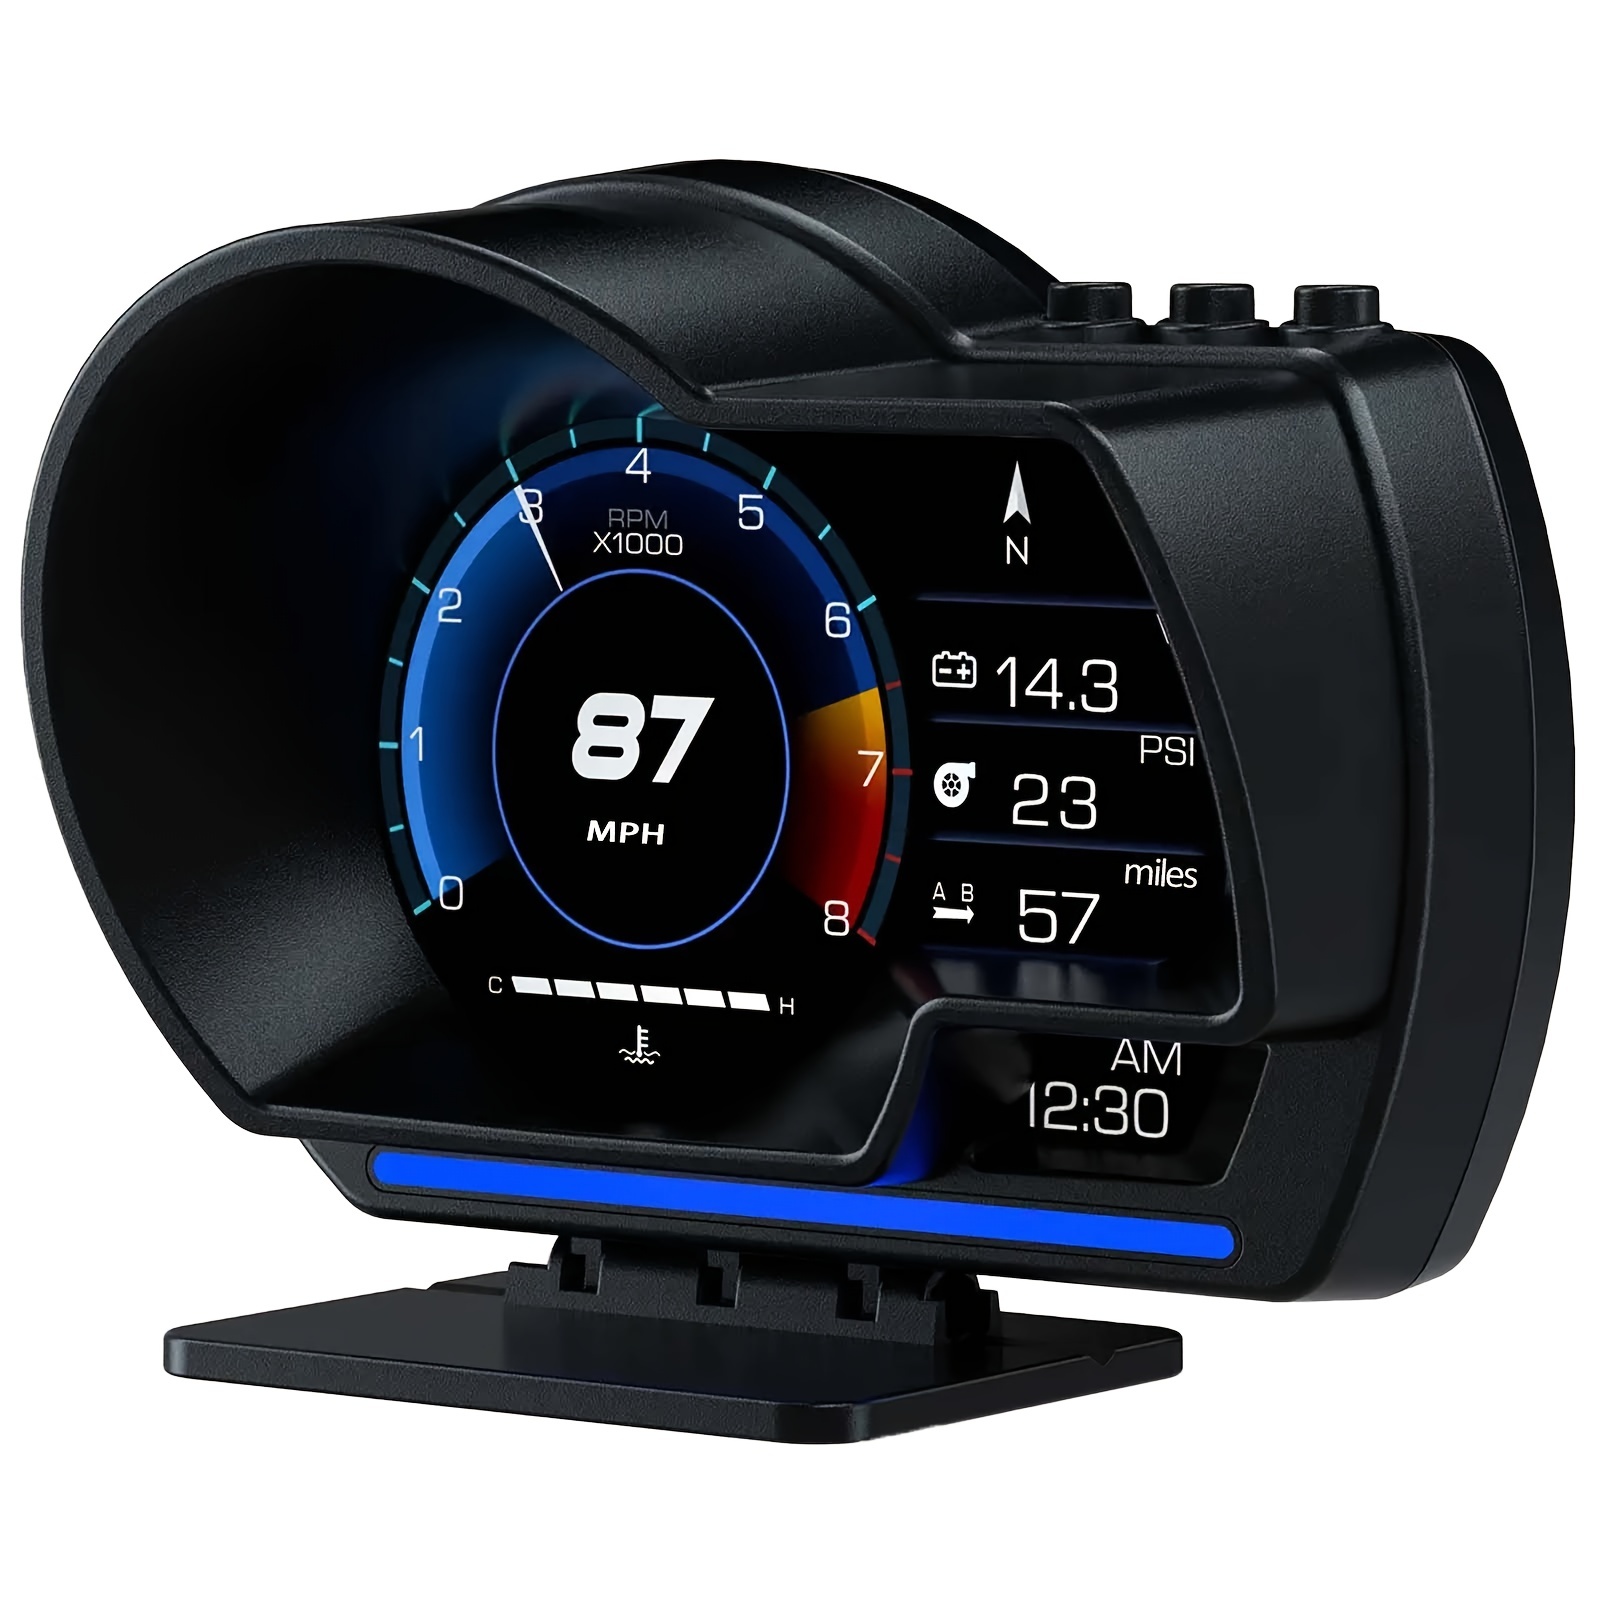  Heads Up Display,5.5 HD OBD II Car GPS HUD Head Up